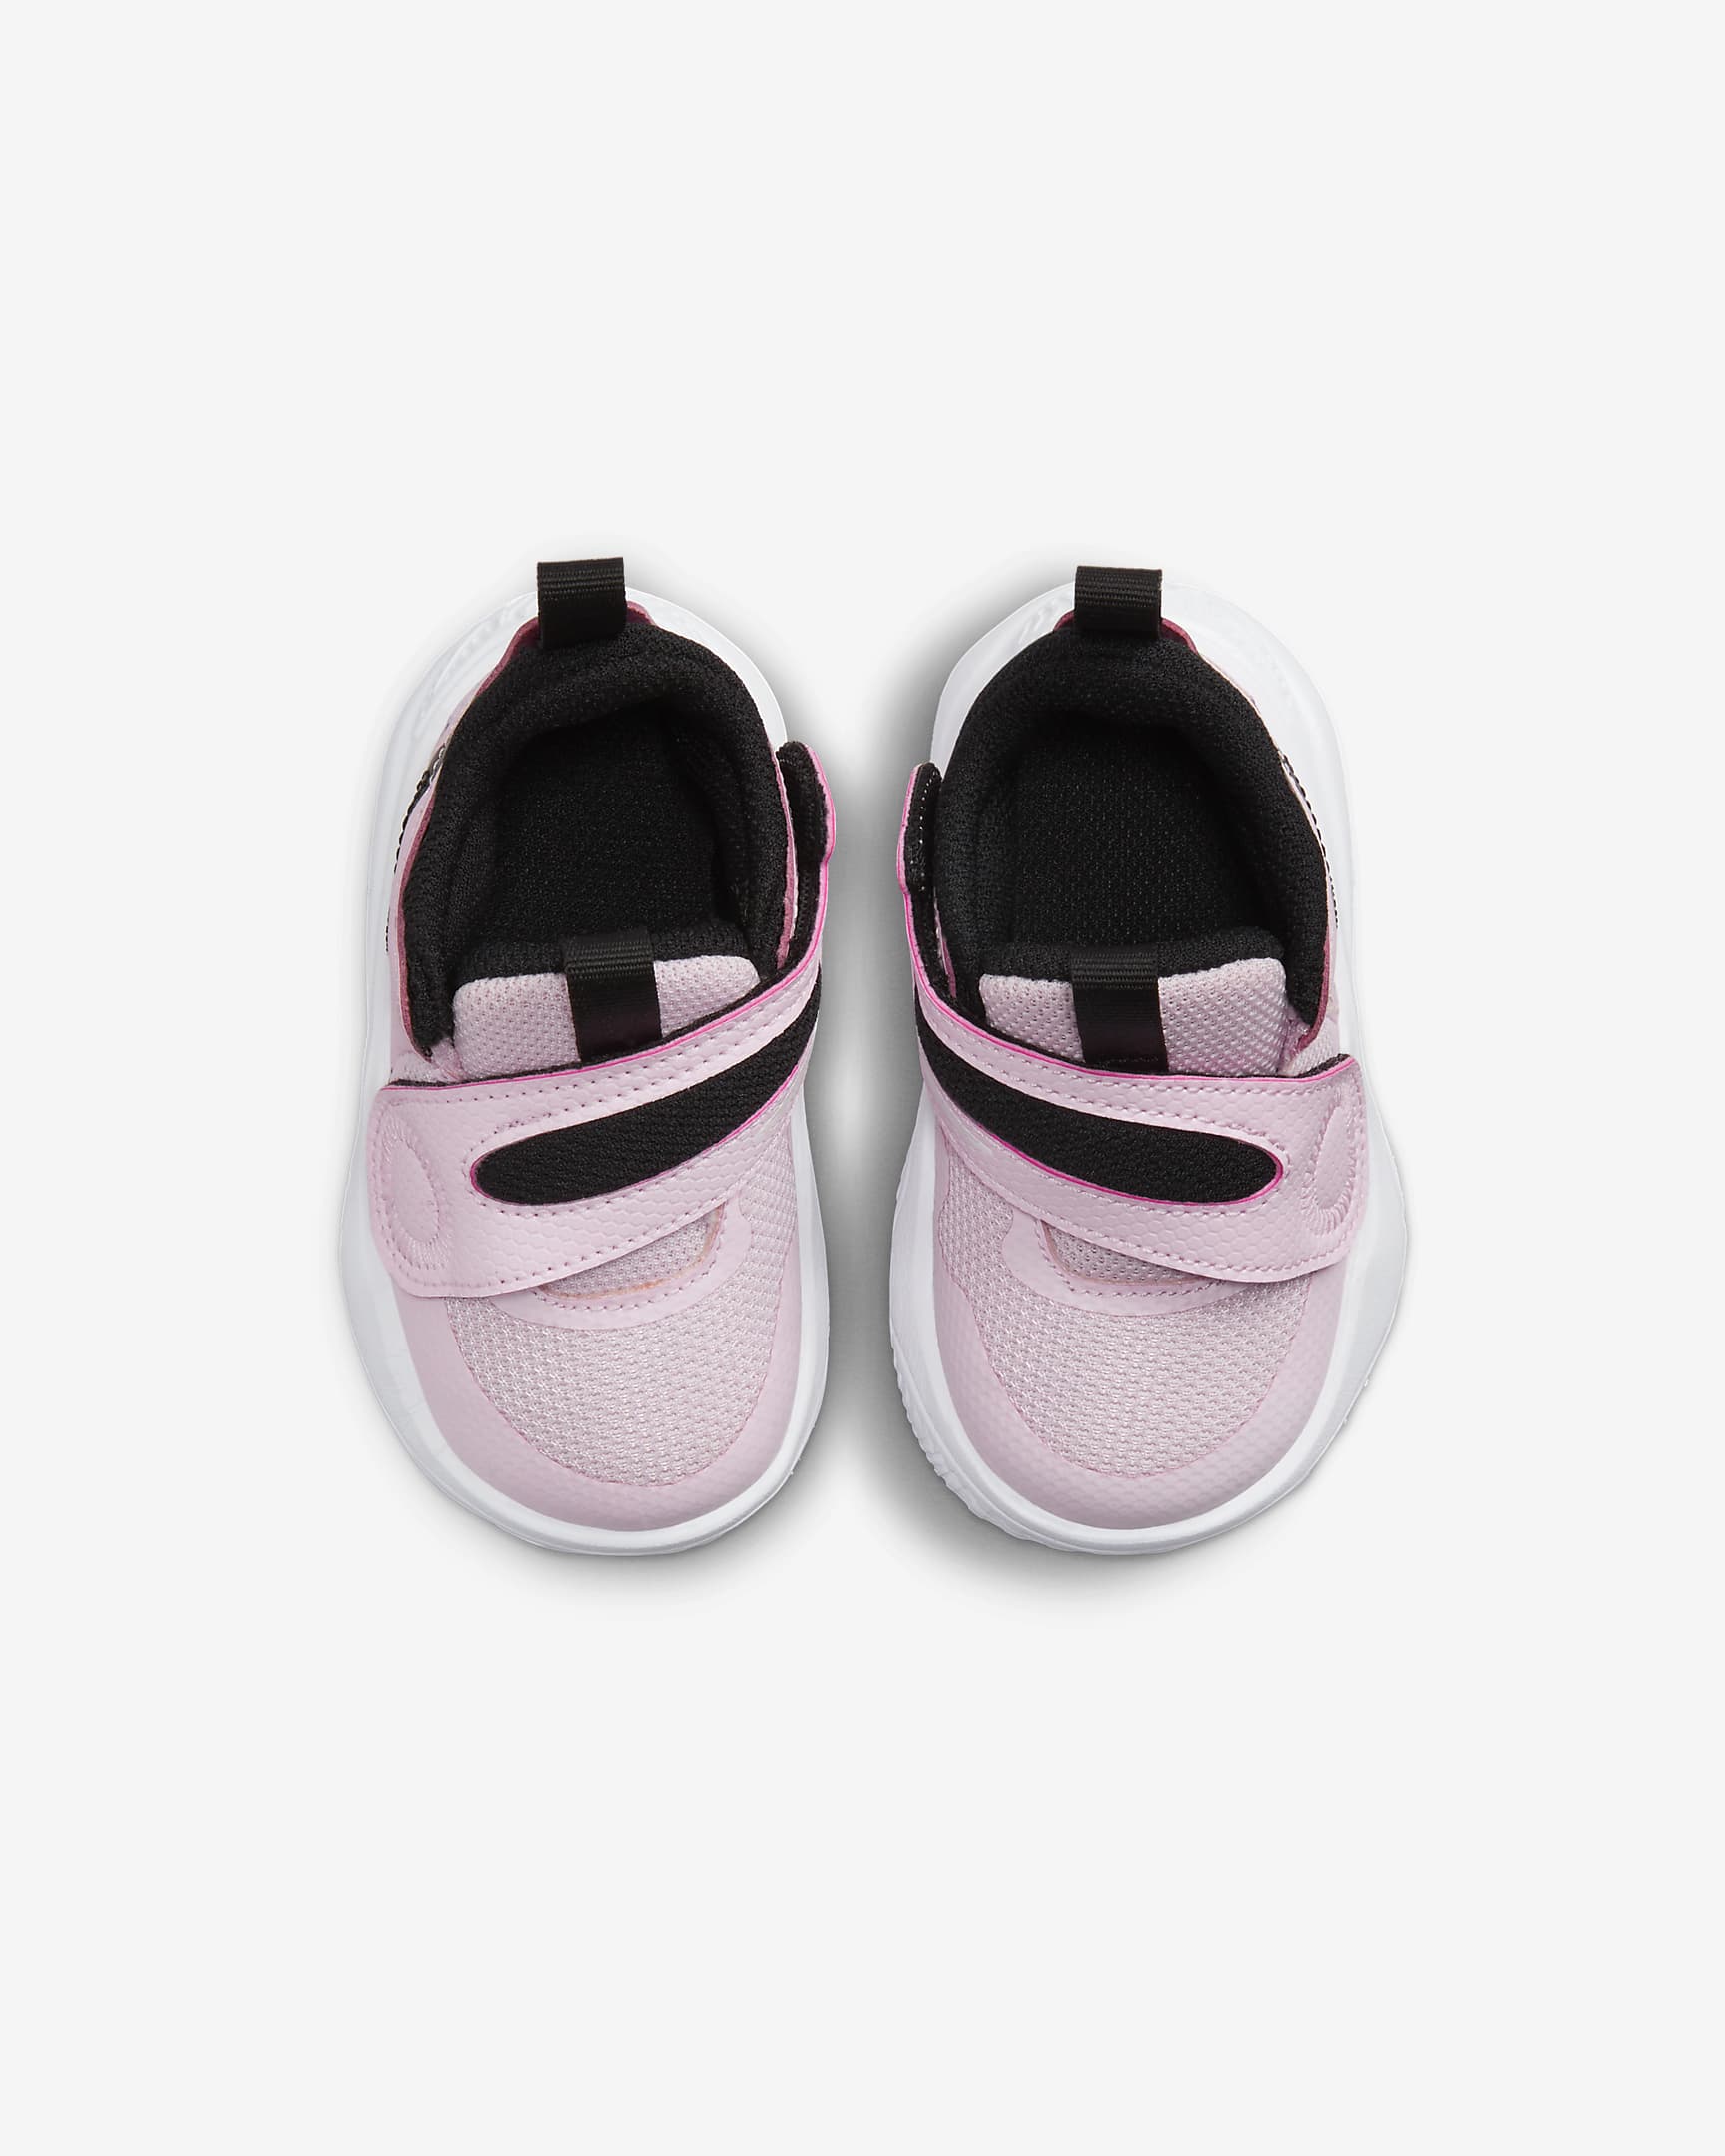 Nike Team Hustle D 11 Baby/Toddler Shoes. Nike AT